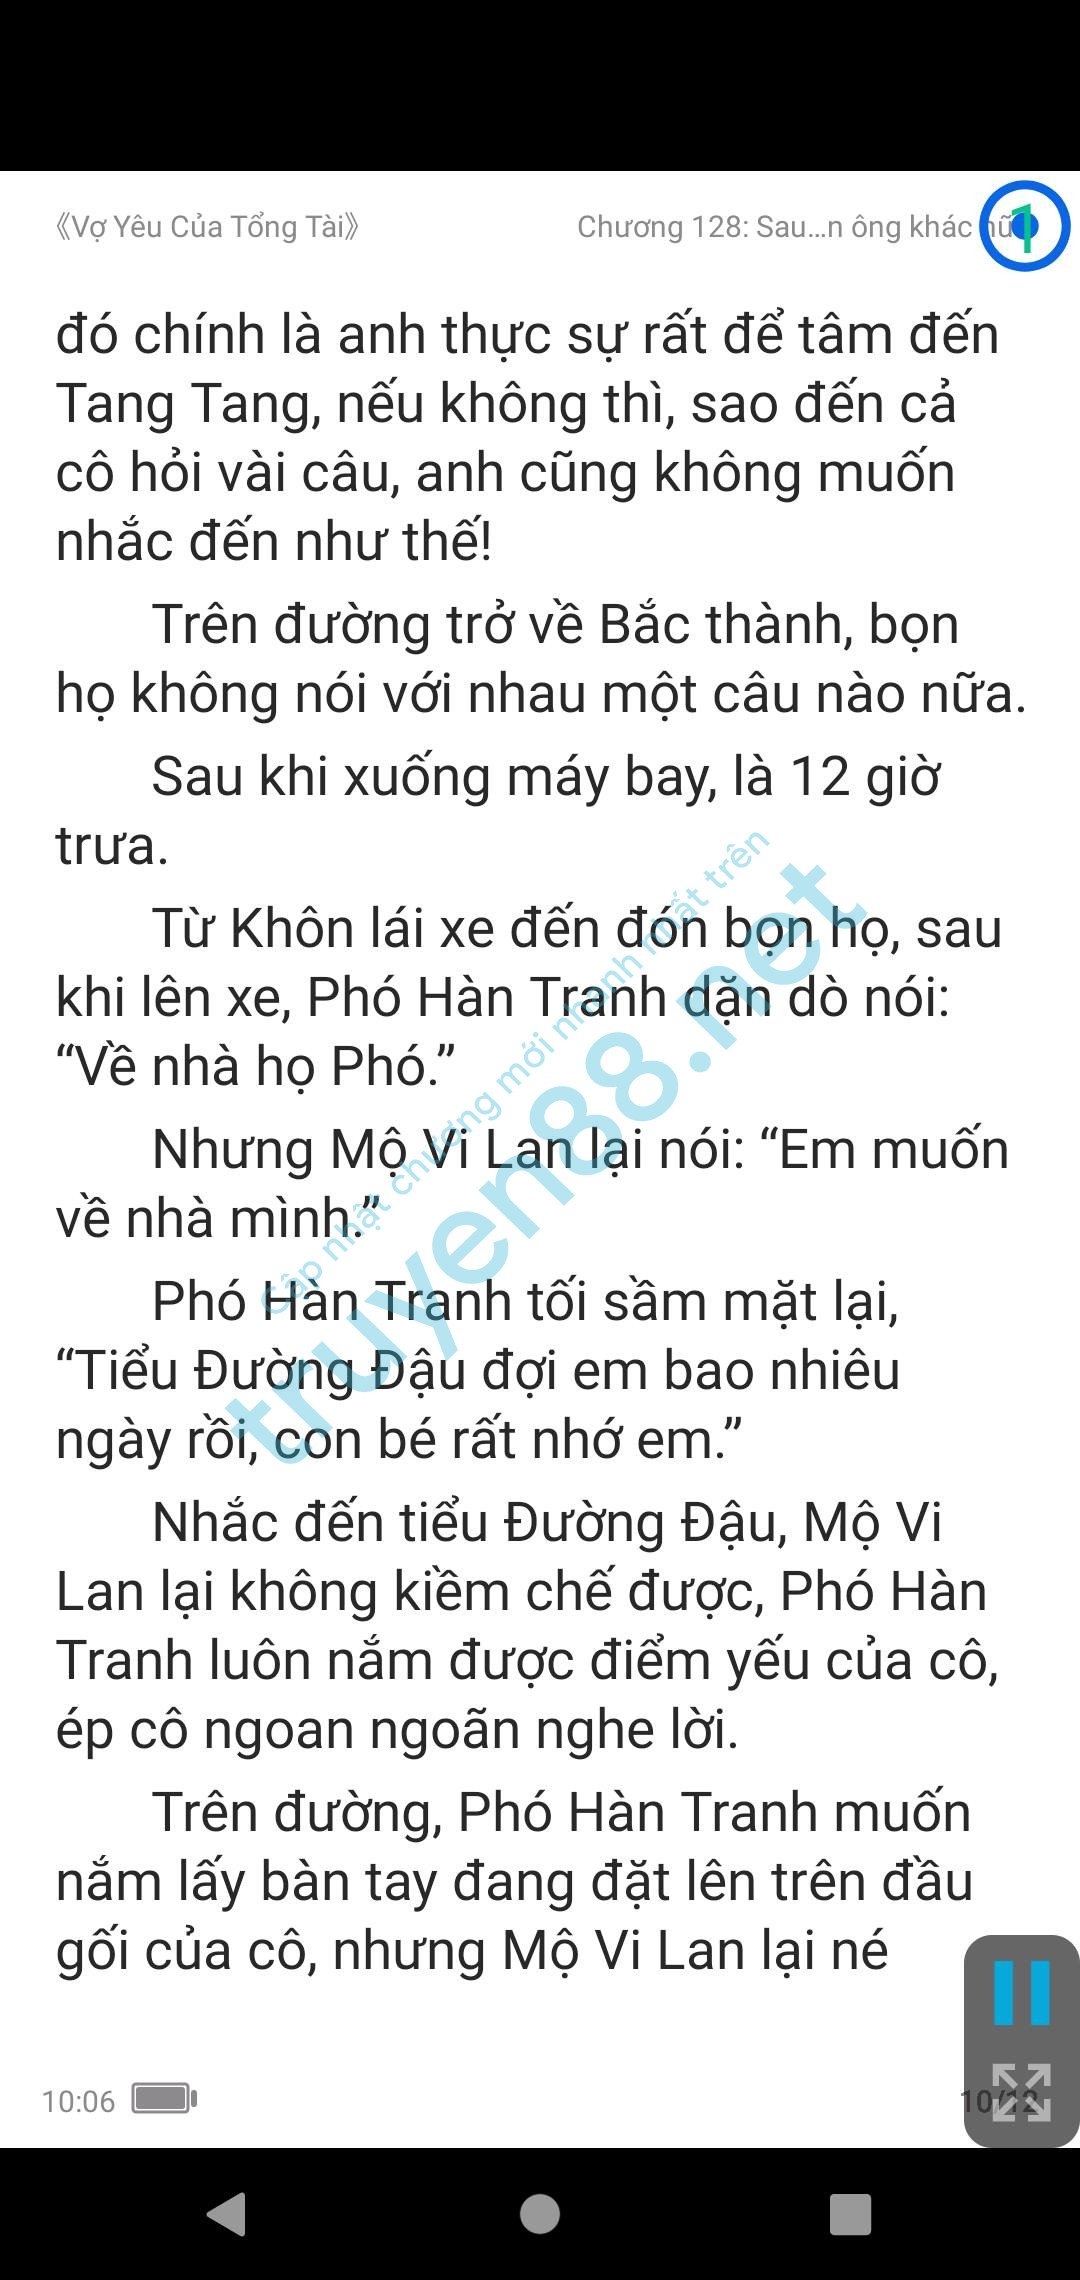 vo-yeu-cua-tong-tai-mo-vi-lan--pho-han-tranh-128-1